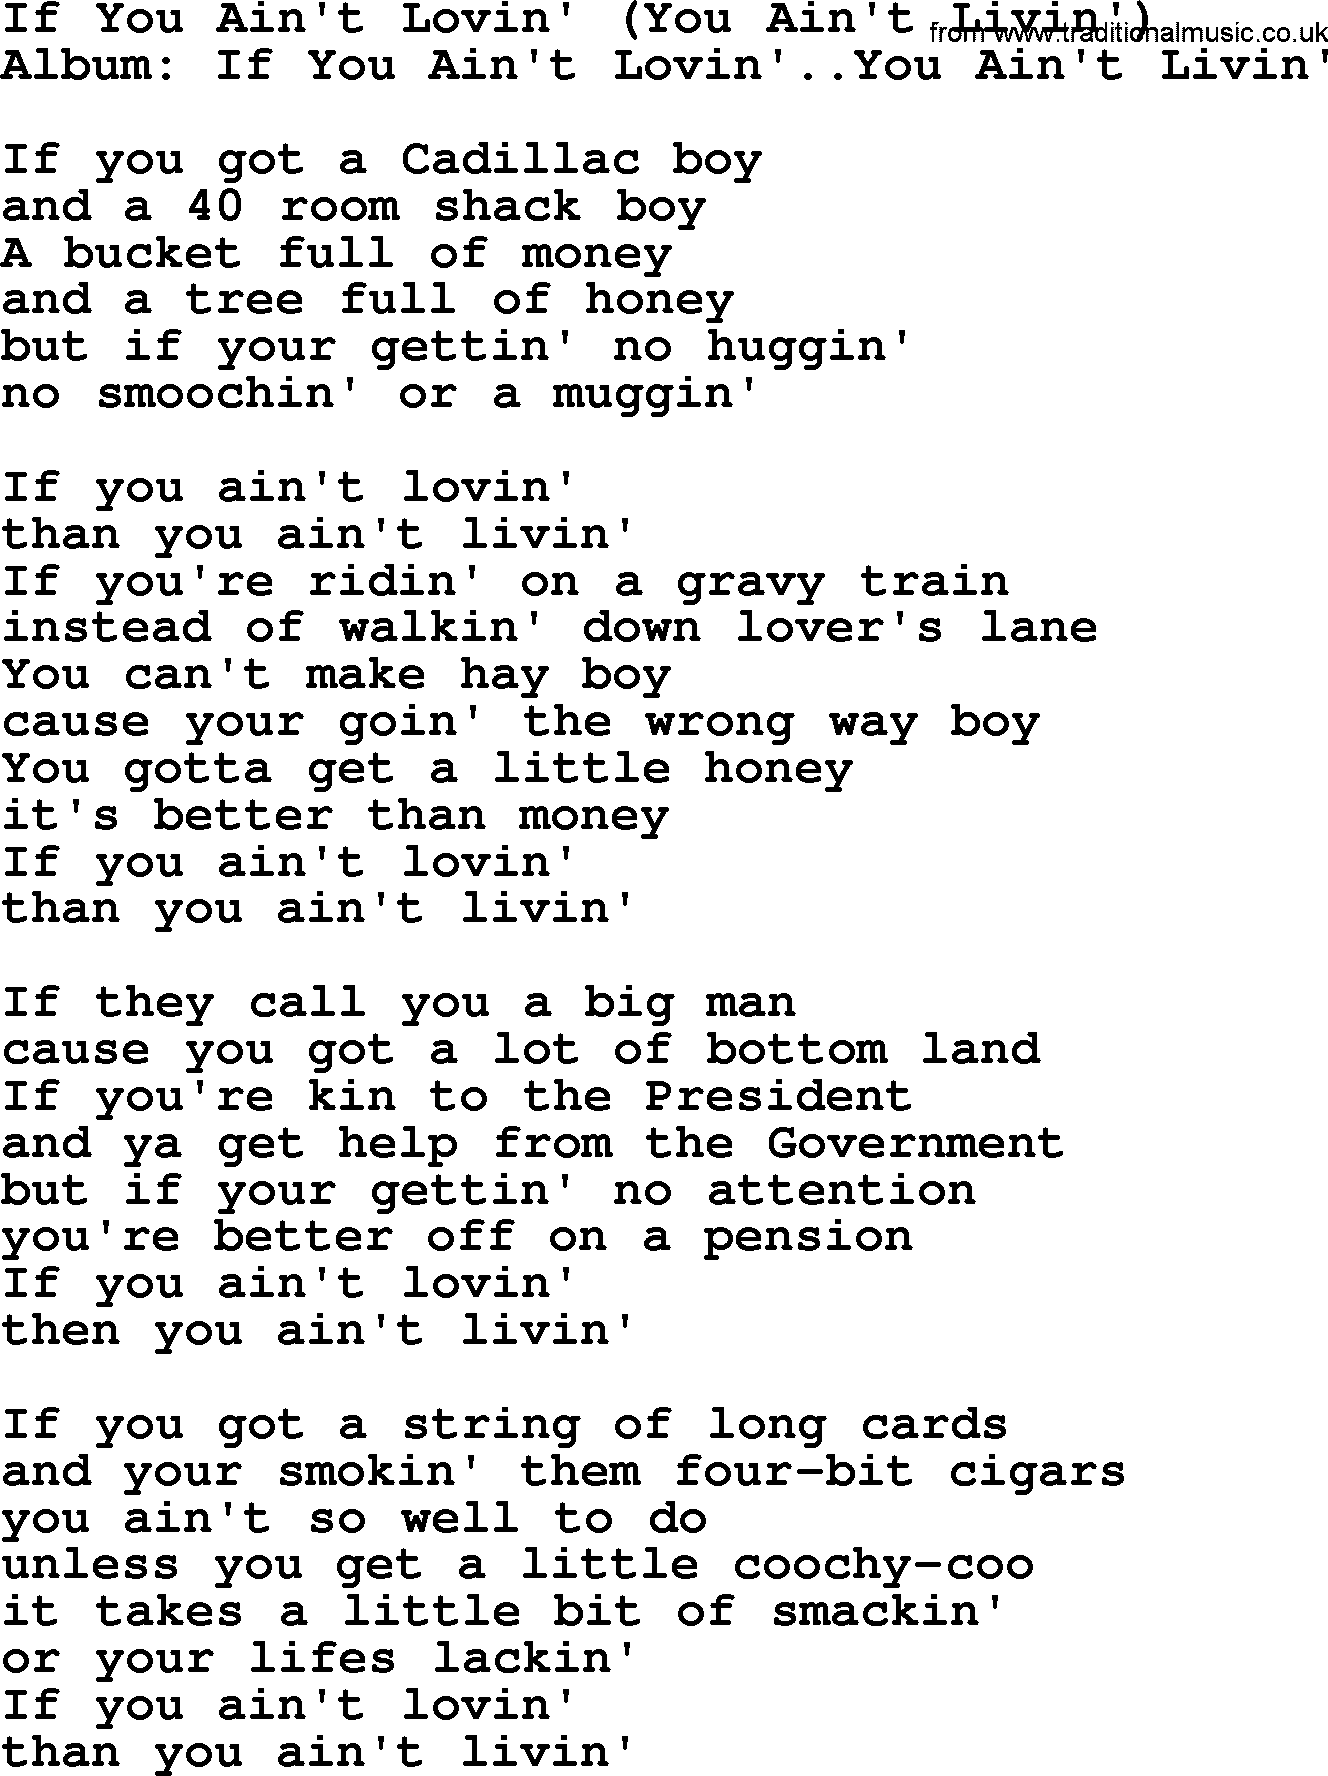 George Strait song: If You Ain't Lovin' You Ain't Livin', lyrics